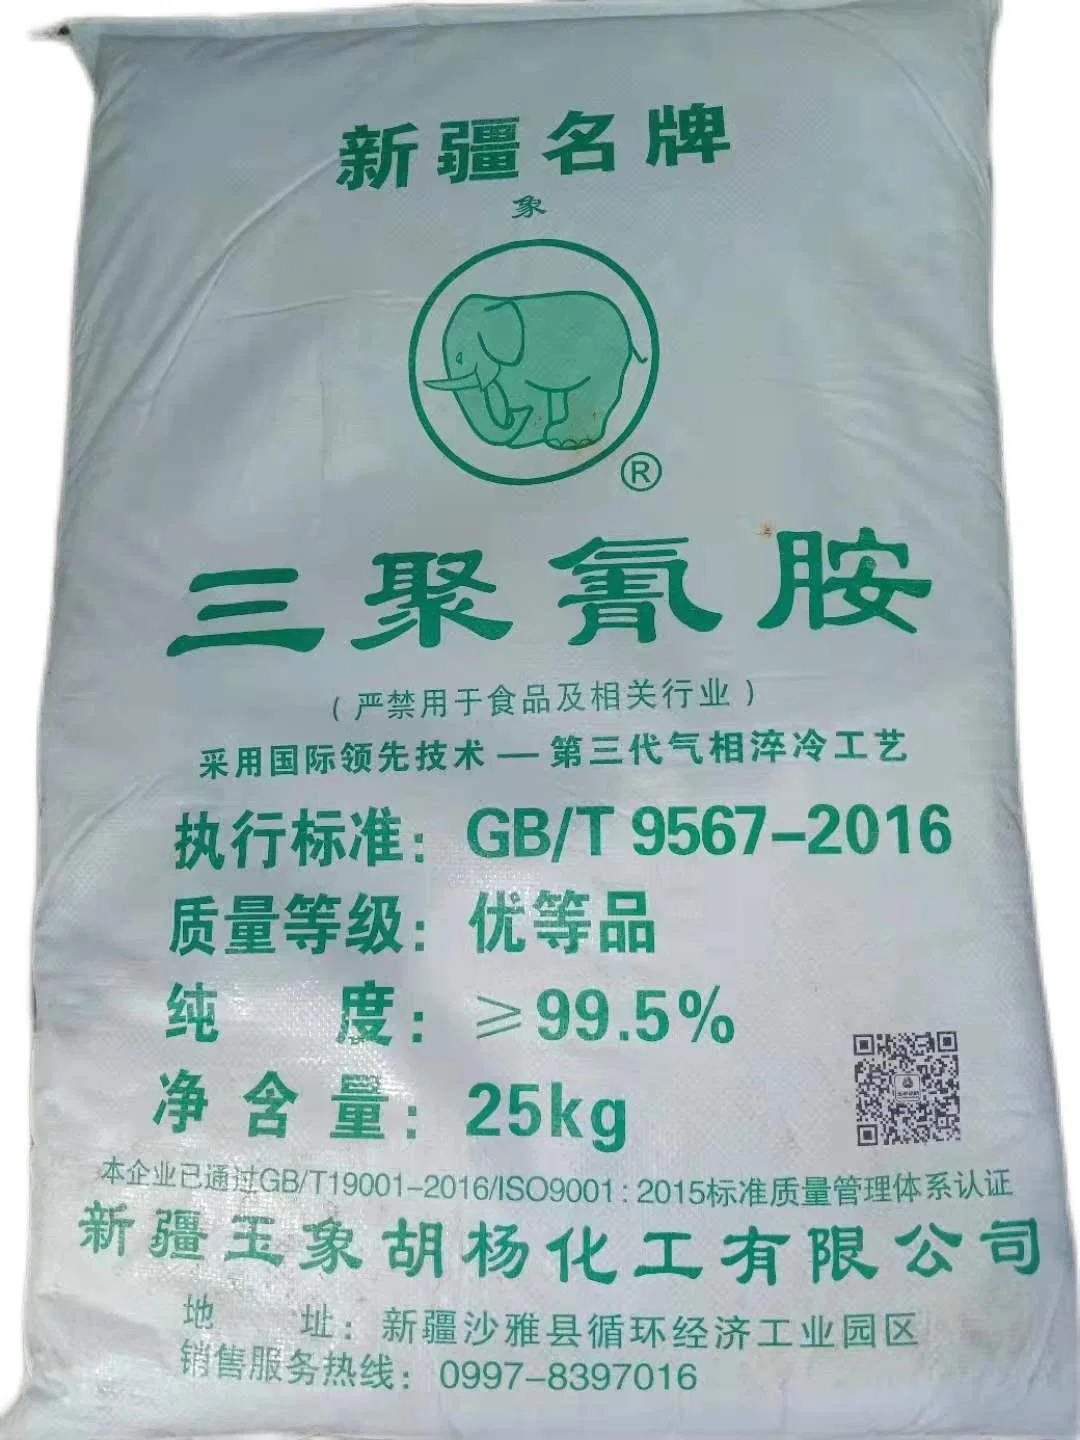 Original Factory CAS 108-78-1 C3h6n6 Chemical Price 99.8% Min Melamine Powder